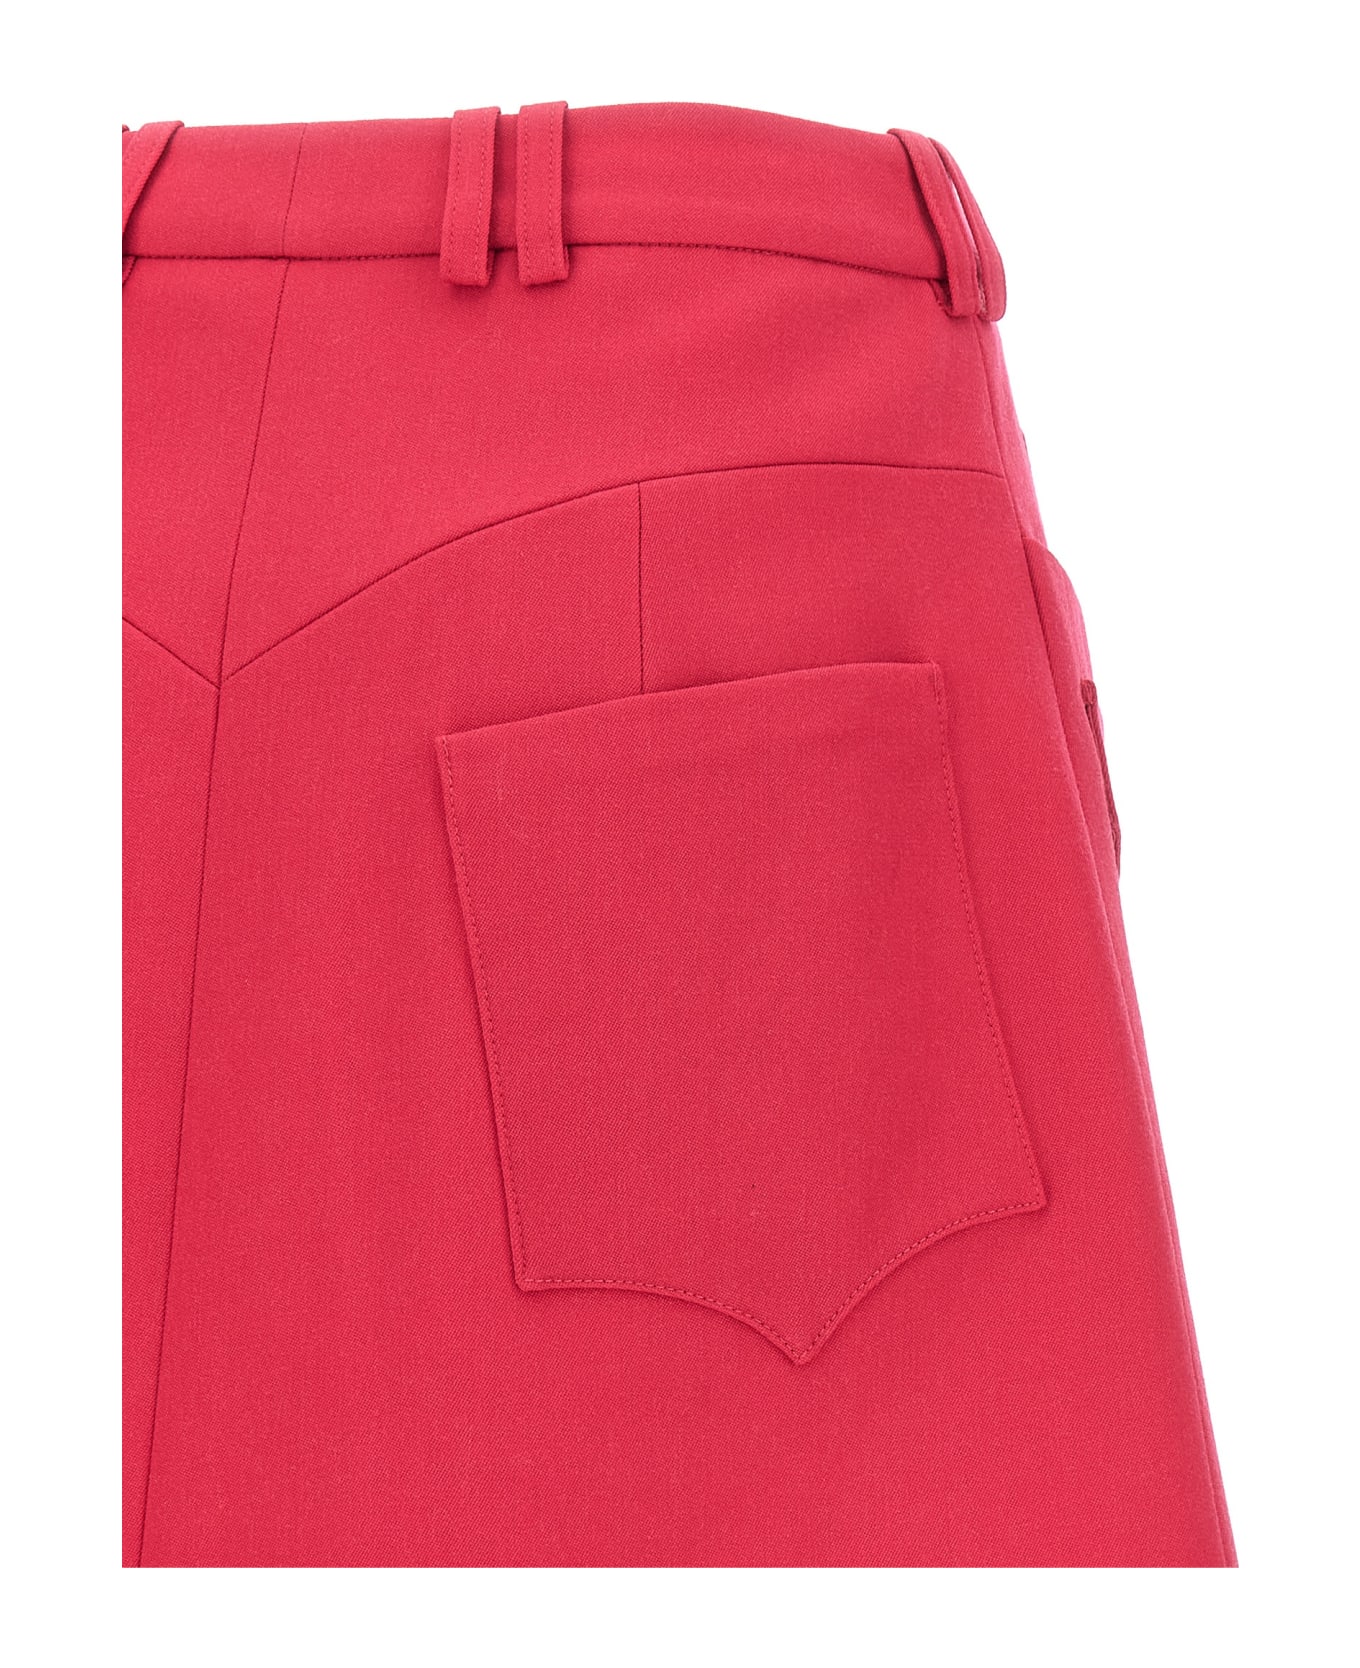 Balmain Logo Button Mini Skirt - Fuchsia